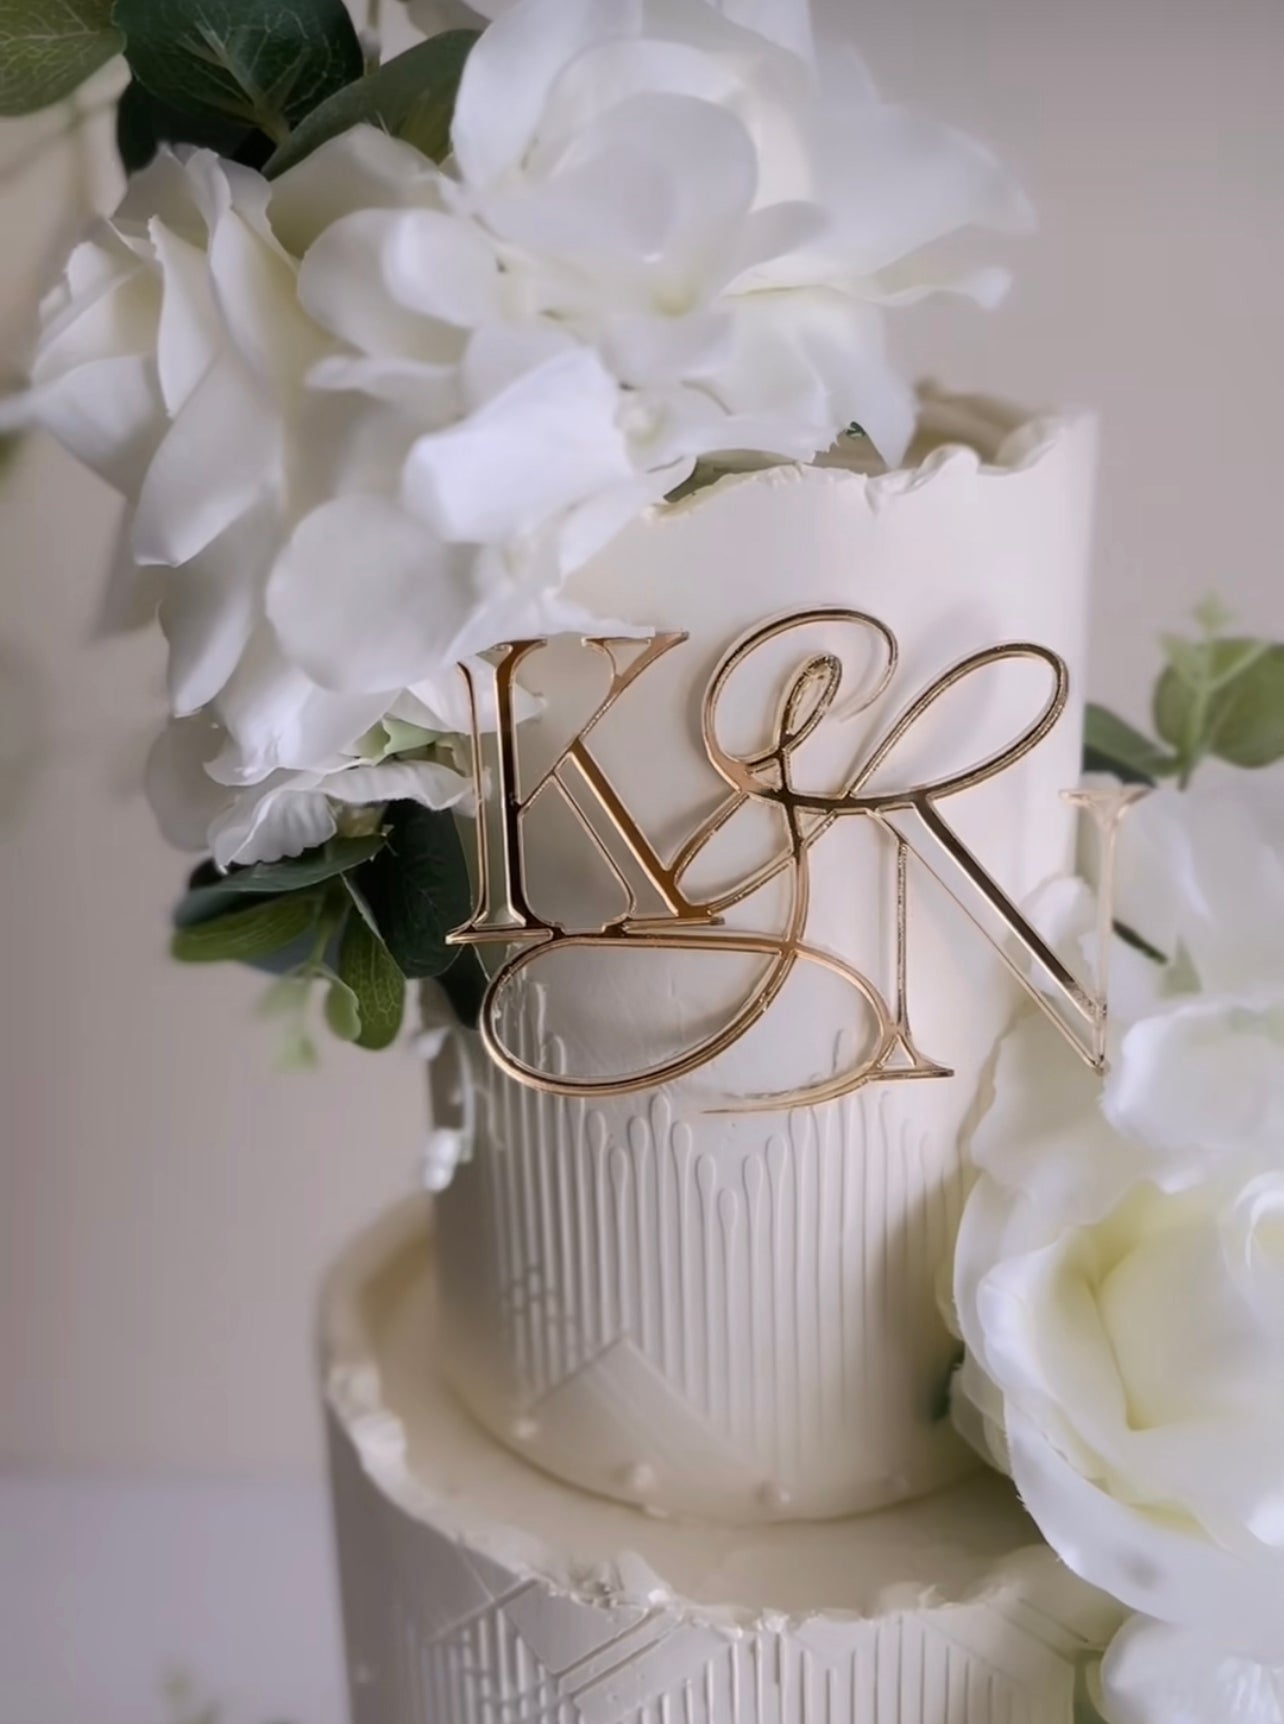 Initials/ Wedding Acrylic cake charm